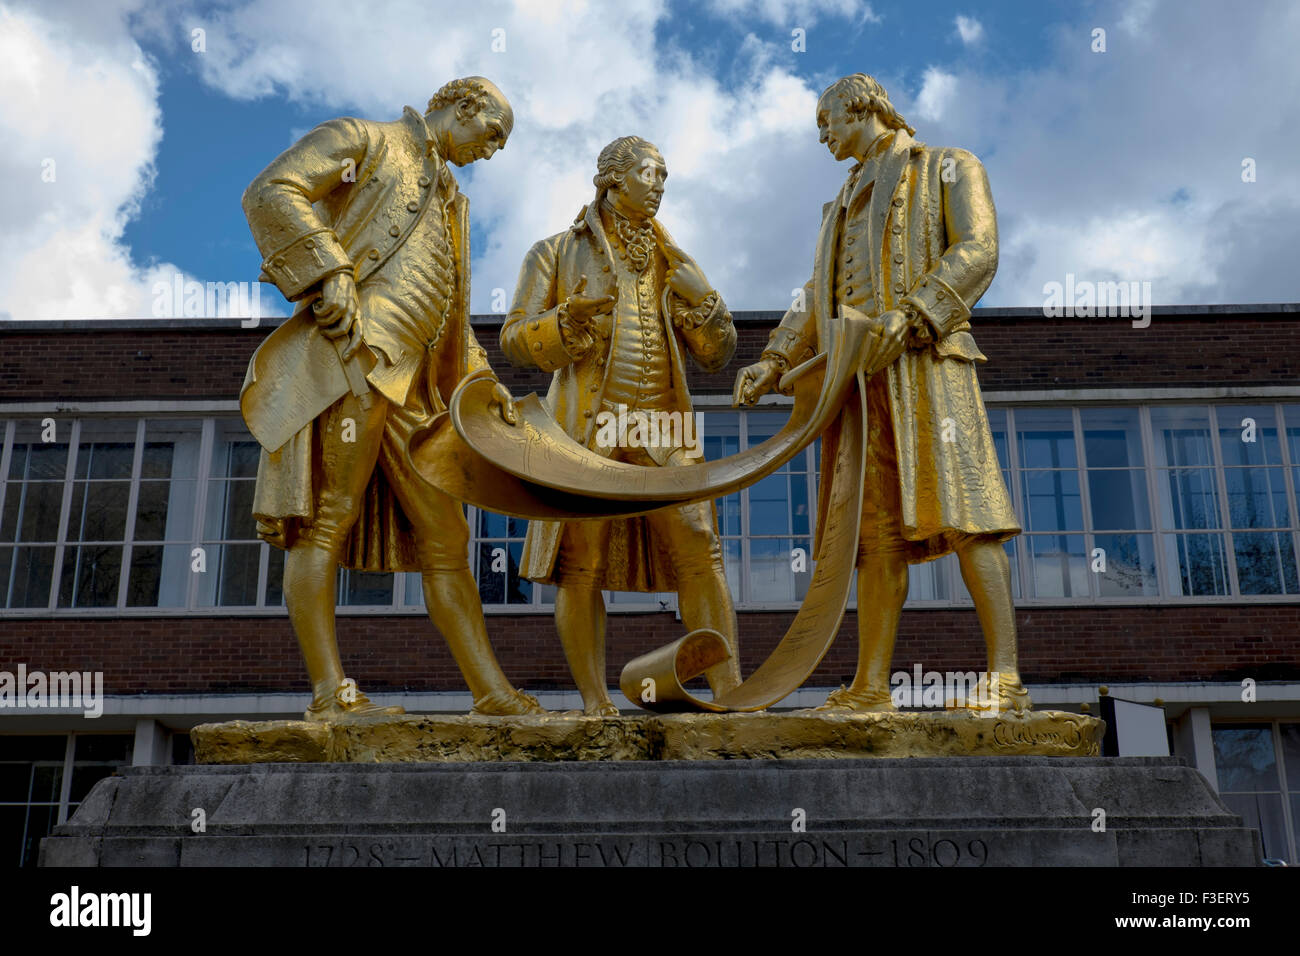 Statue de Matthew Boulton et James Watt, William Murdoch par William Bloye, Broad Street, Birmingham, Royaume-Uni Banque D'Images